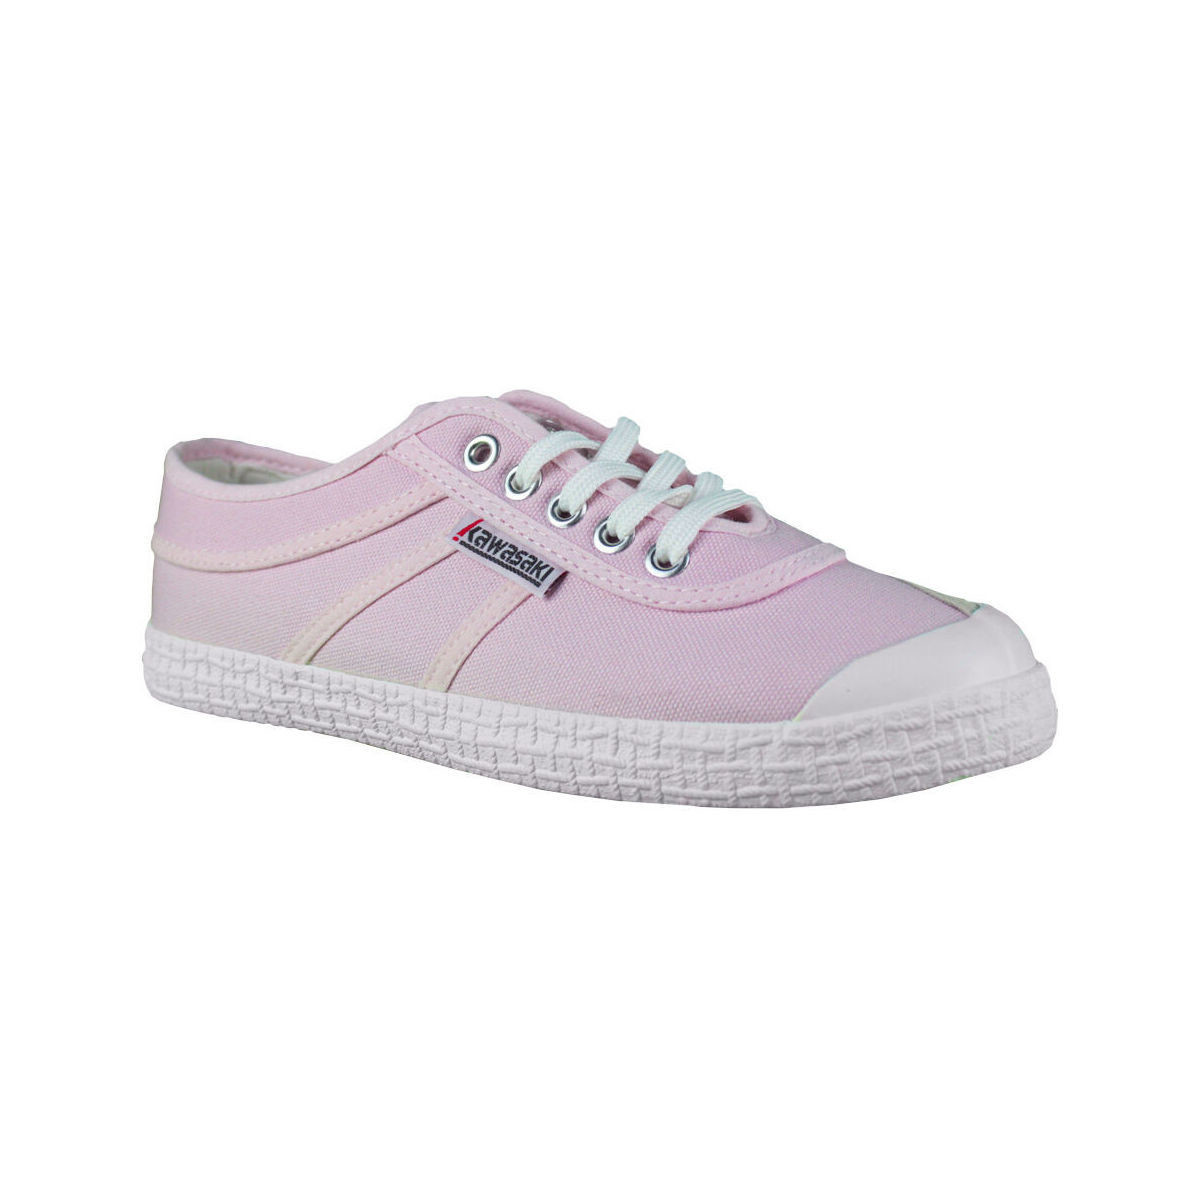 kengät Tennarit Kawasaki Original Canvas Shoe K192495-ES 4046 Candy Pink Vaaleanpunainen